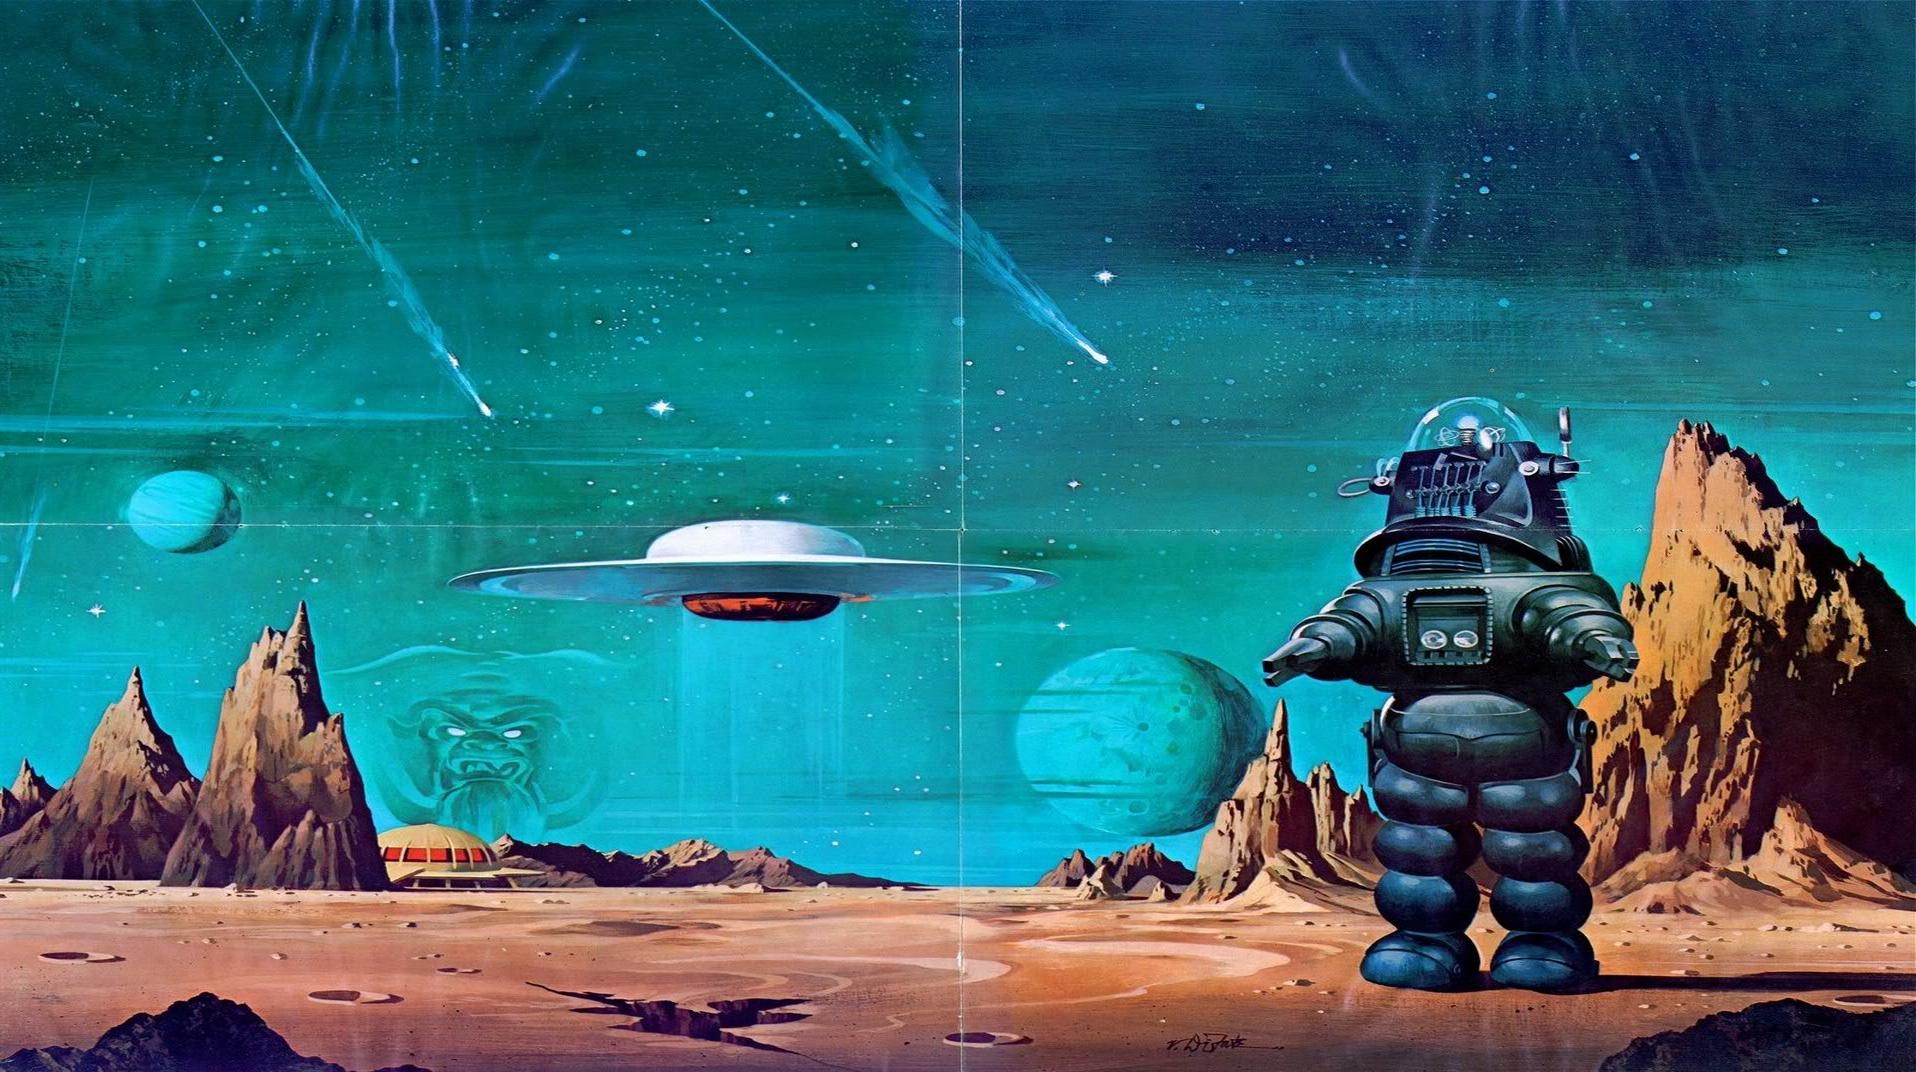 Retro Sci Fi Robot Wallpapers